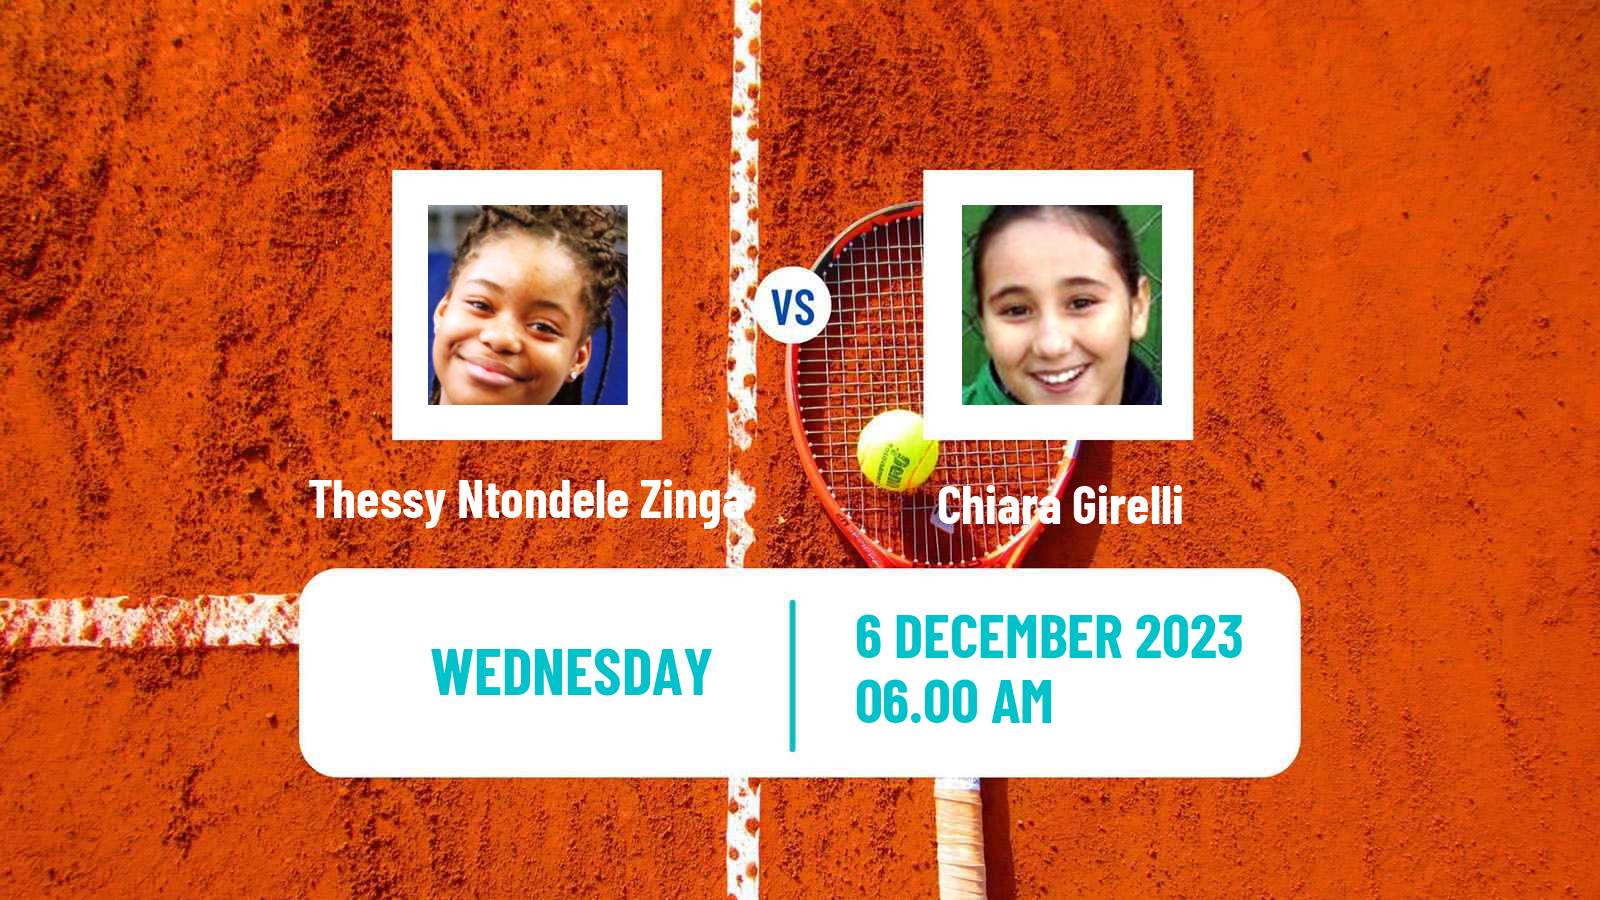 Tennis ITF W15 Valencia 2 Women Thessy Ntondele Zinga - Chiara Girelli